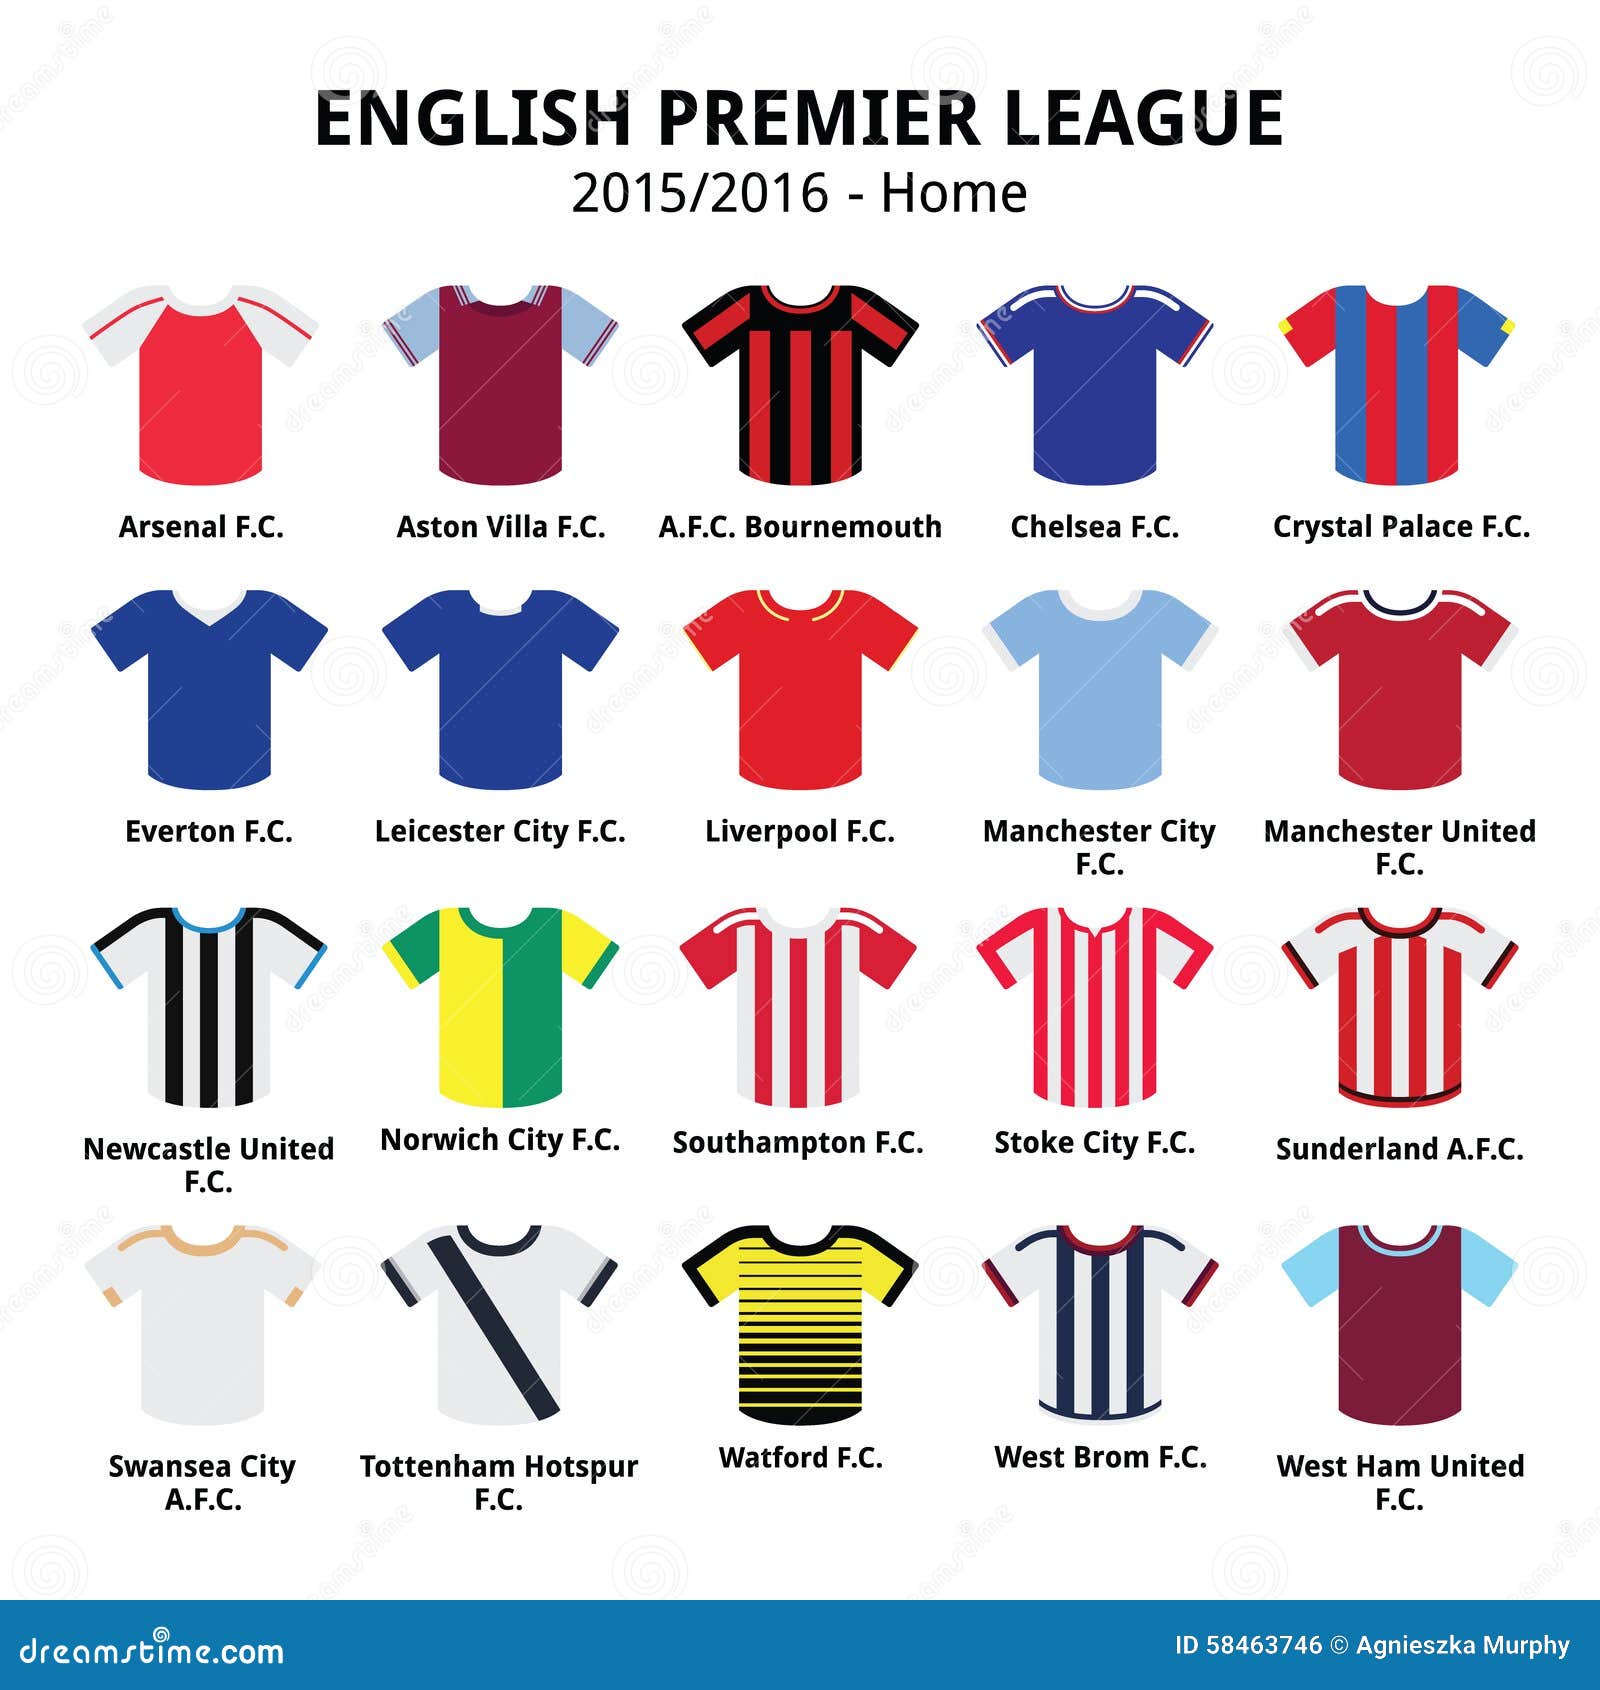 english premier league 2015 - 2016 football or soccer jerseys icons set